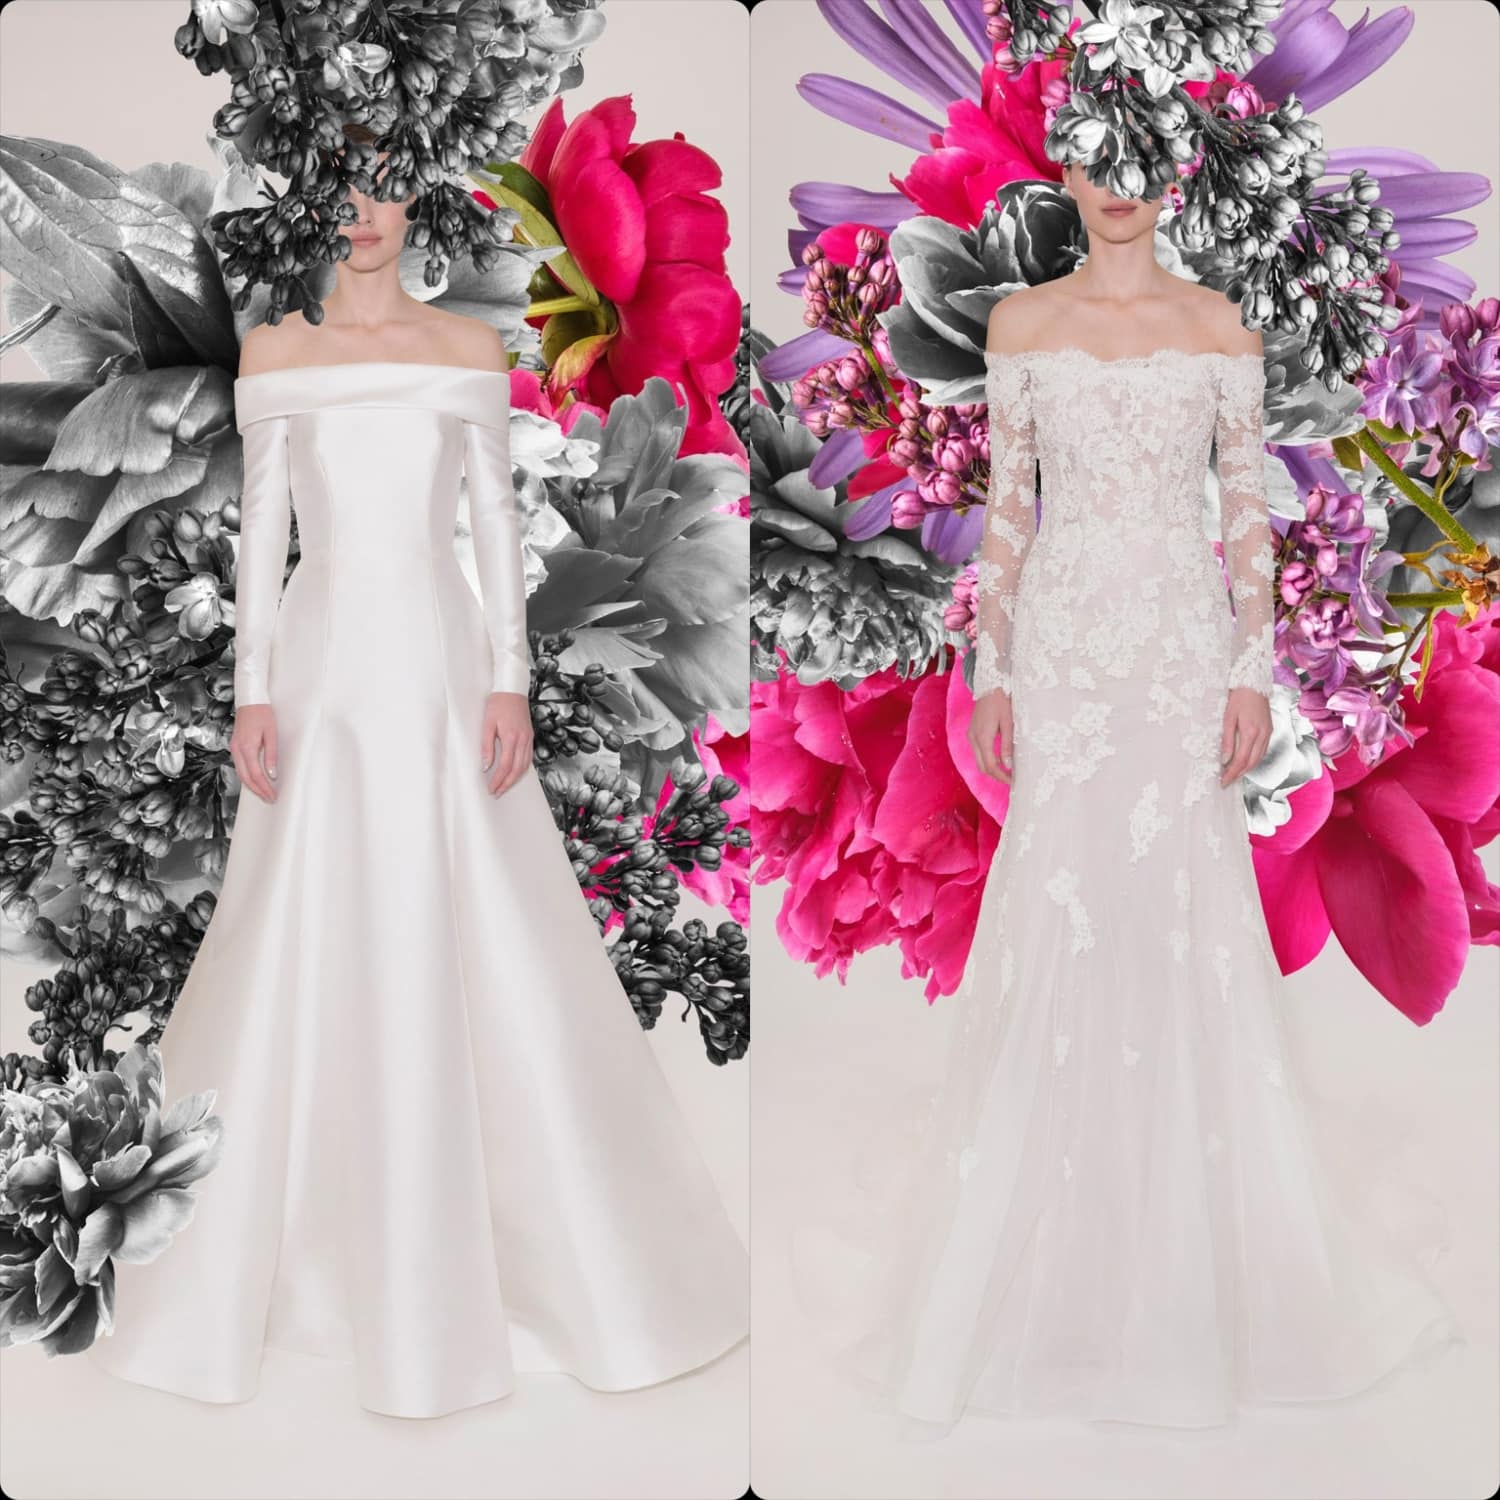 Reem Acra Bridal Spring Summer 2021 New York. RUNWAY MAGAZINE ® Collections. RUNWAY NOW / RUNWAY NEW